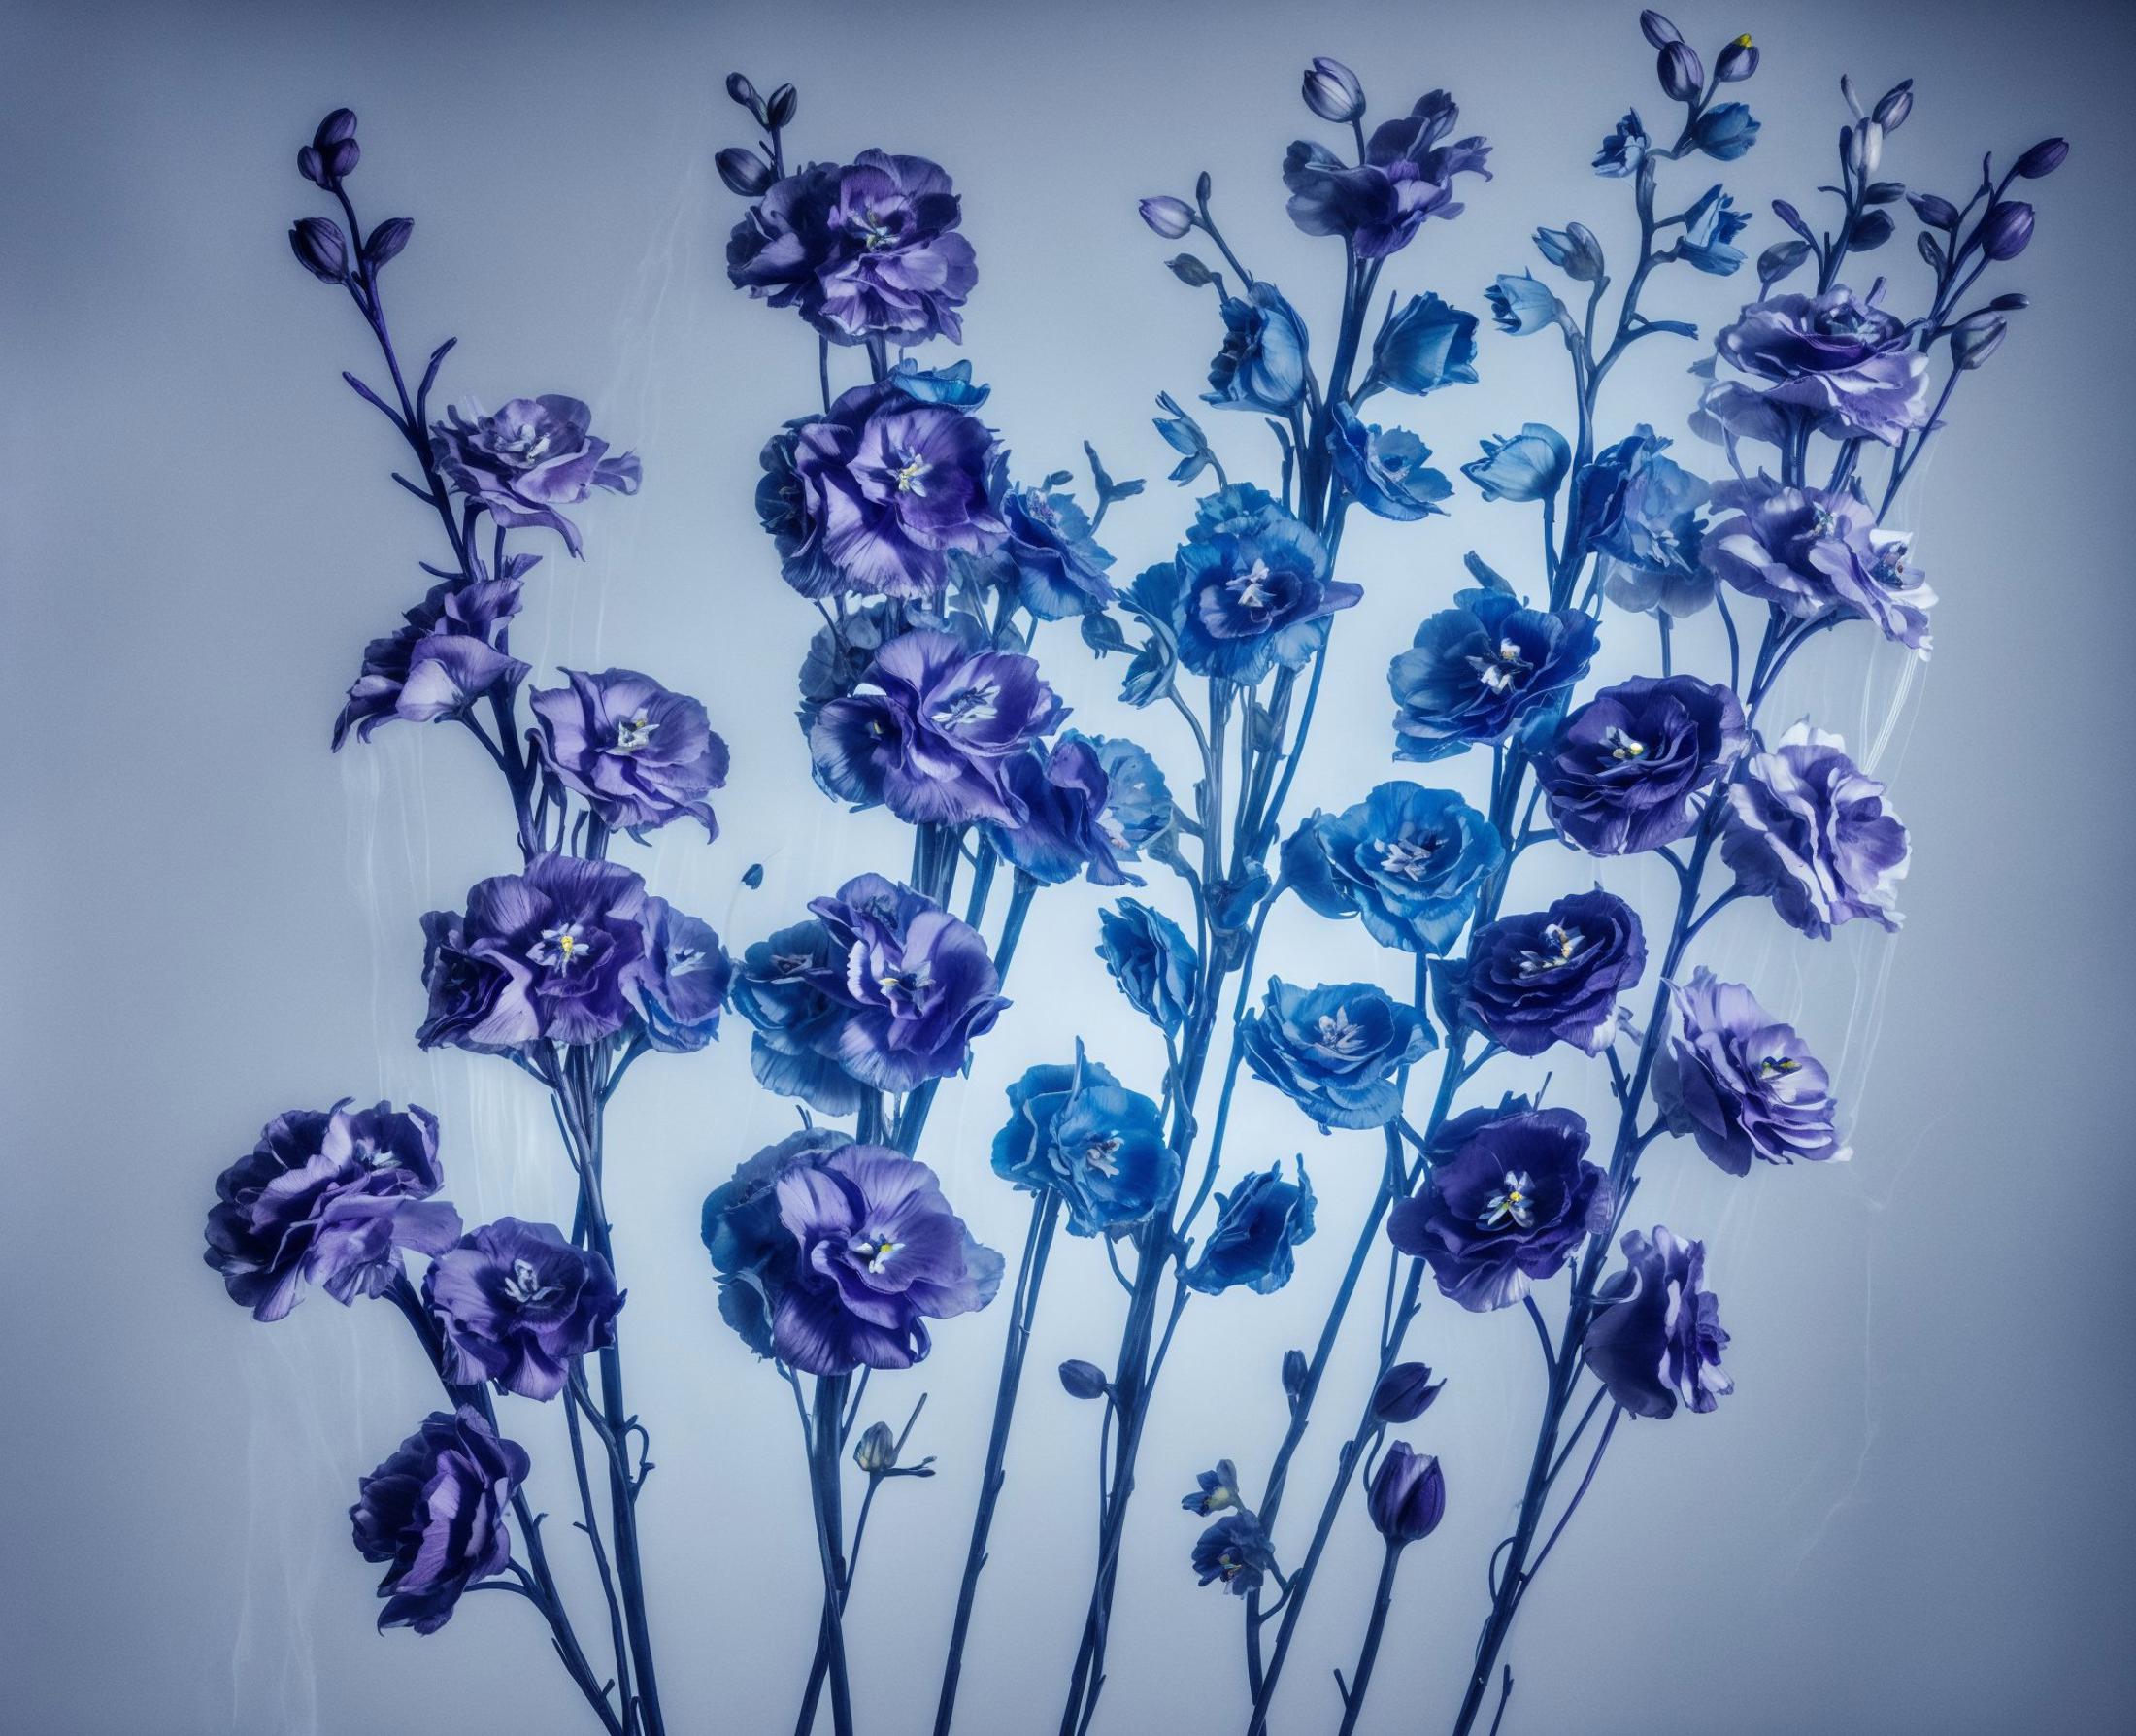 Floweria image by Dima_yiu